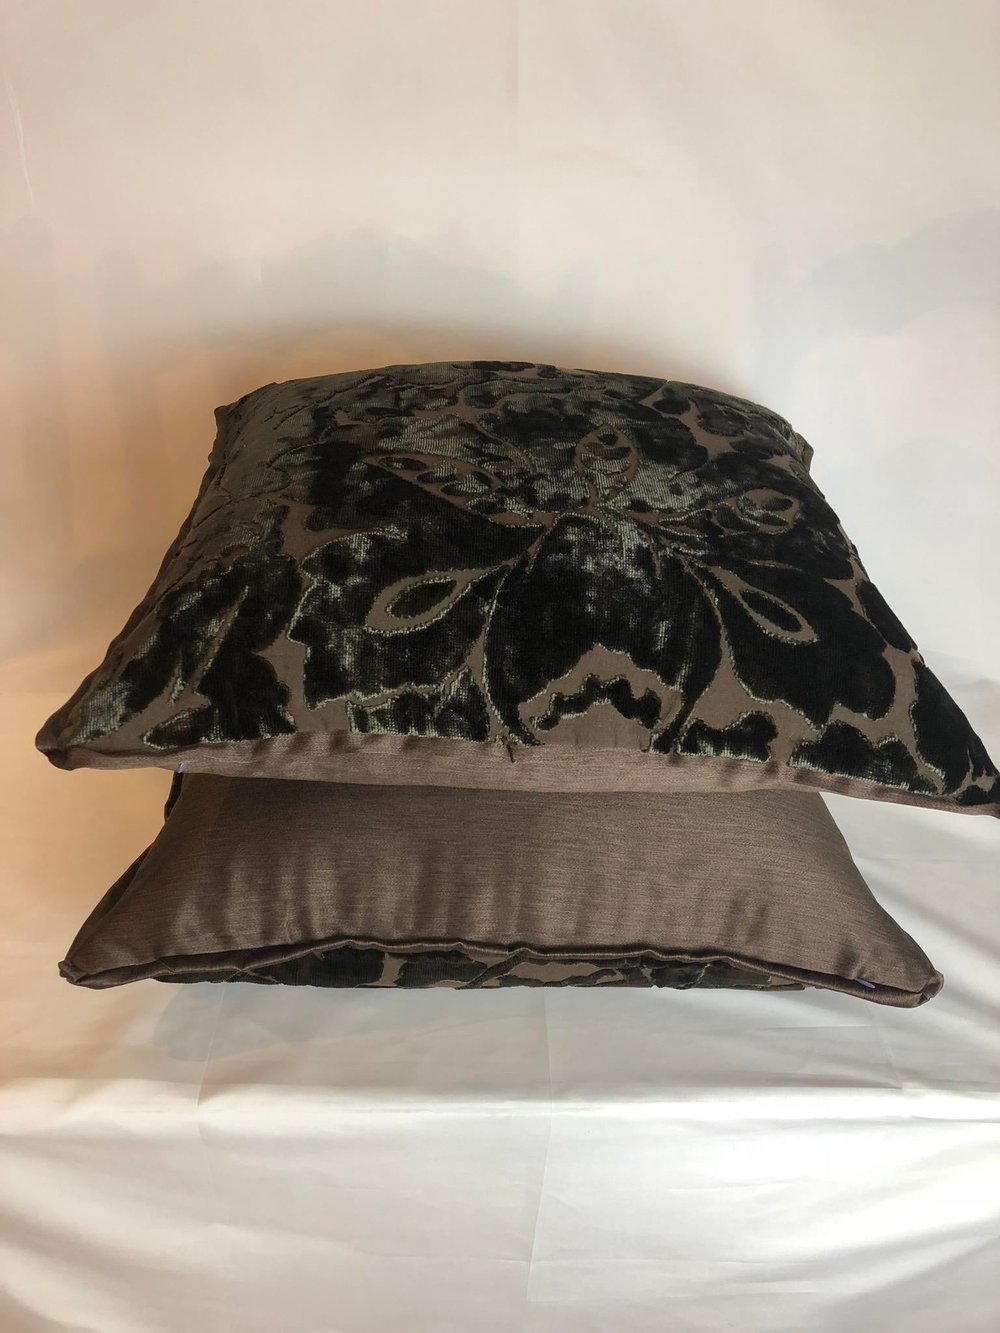 Luxurious Old World Weavers Silk Damask Designer Pillow With 90/10 Down Insert